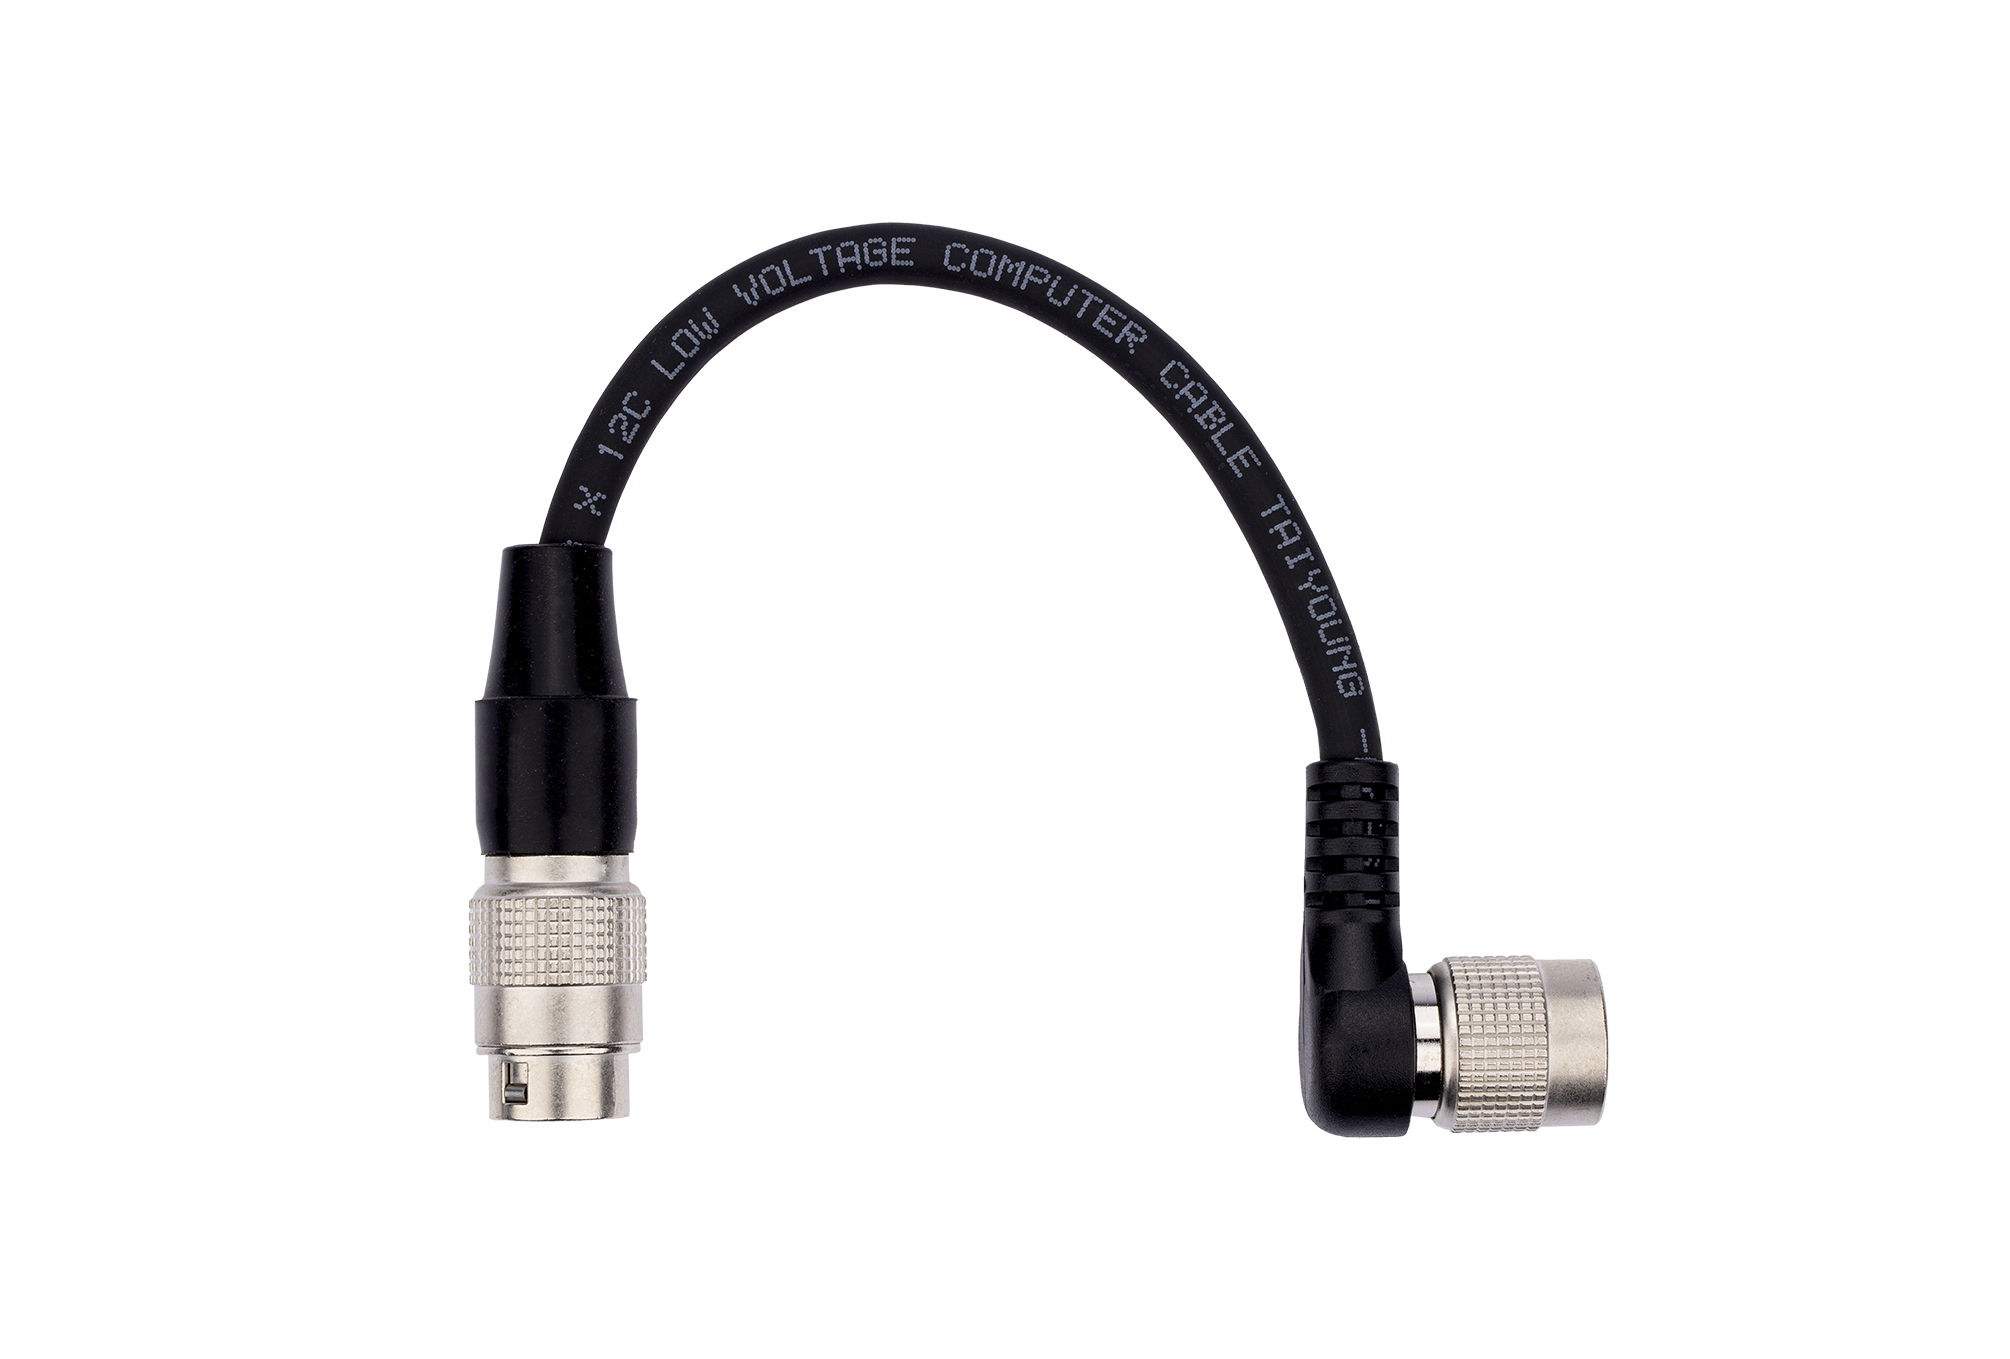 Adaptor cable with Fujinon con.